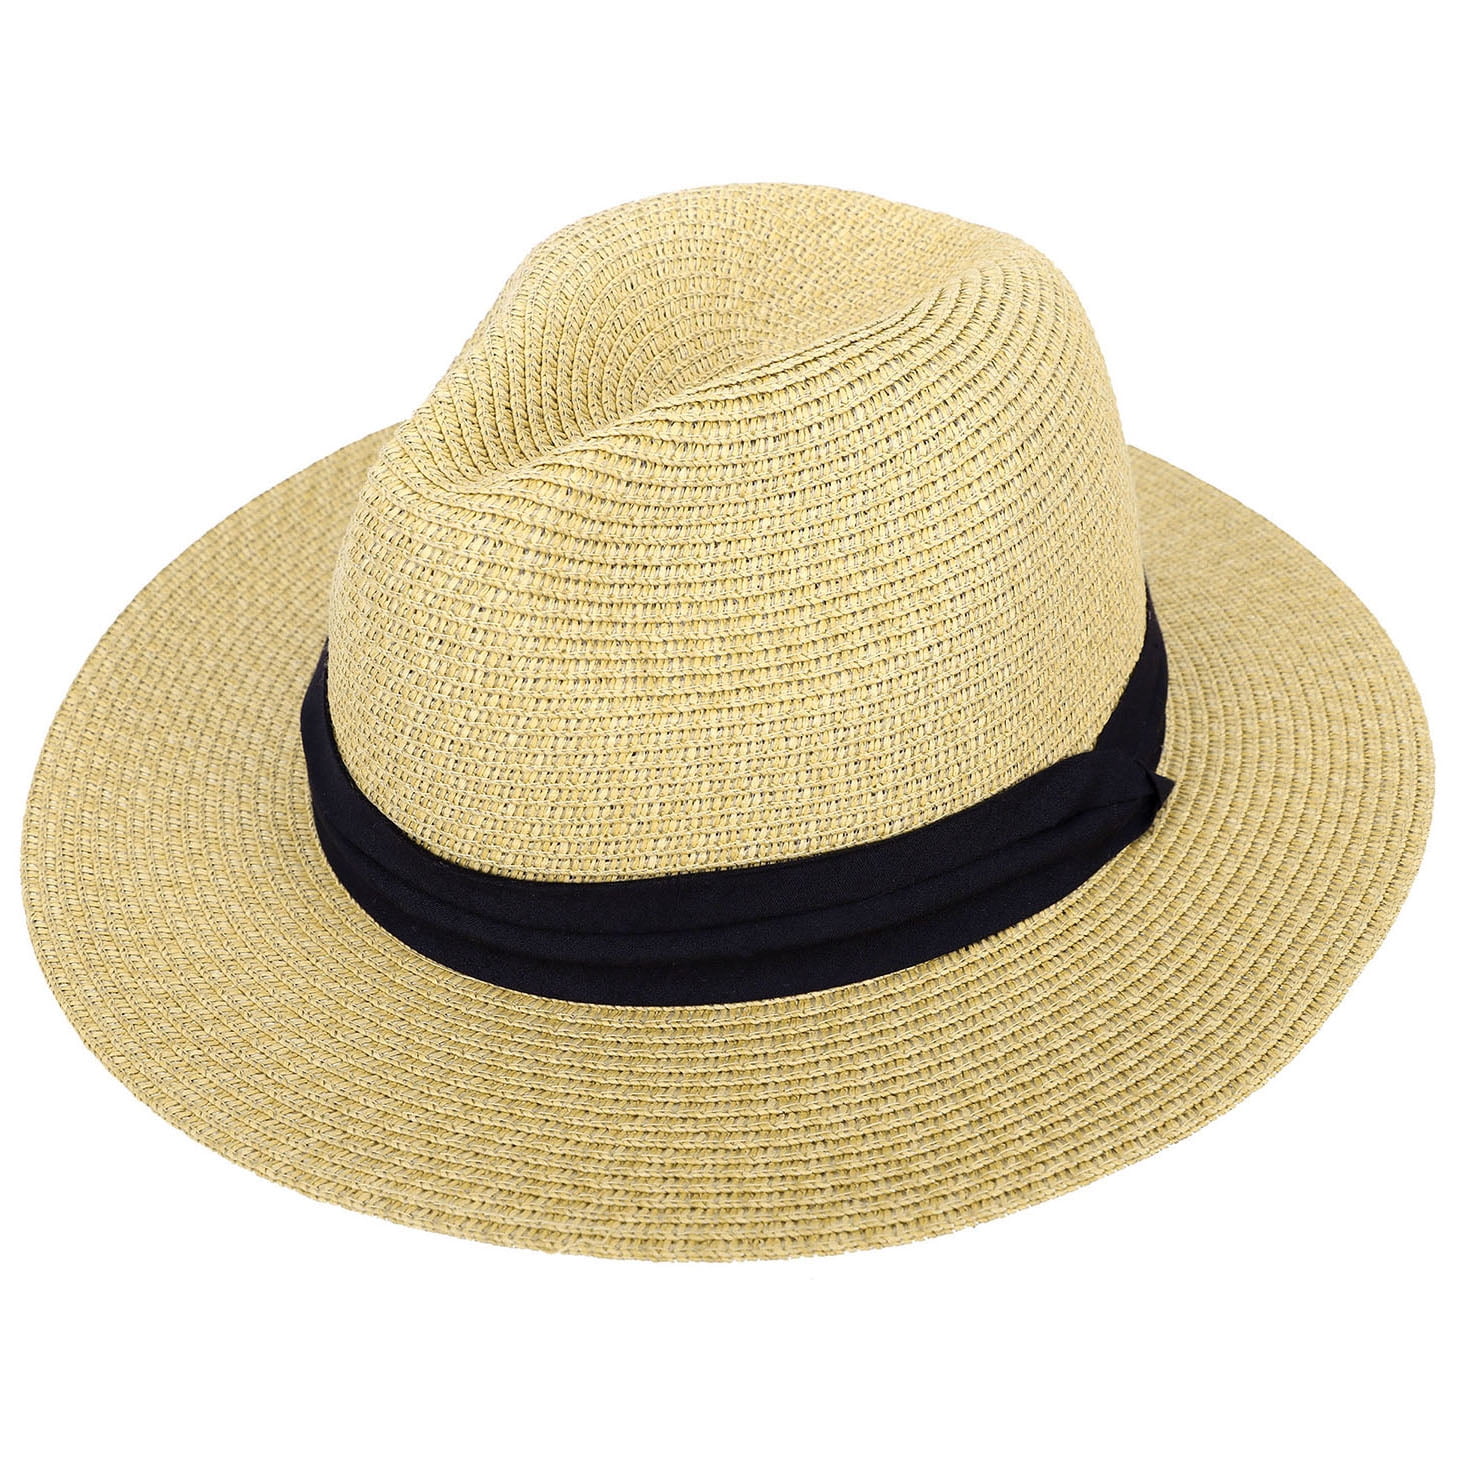 WIM Sombrero Panamá Fedora Panama Hat Black Banded Wide Brim Cool Summer SL6690 